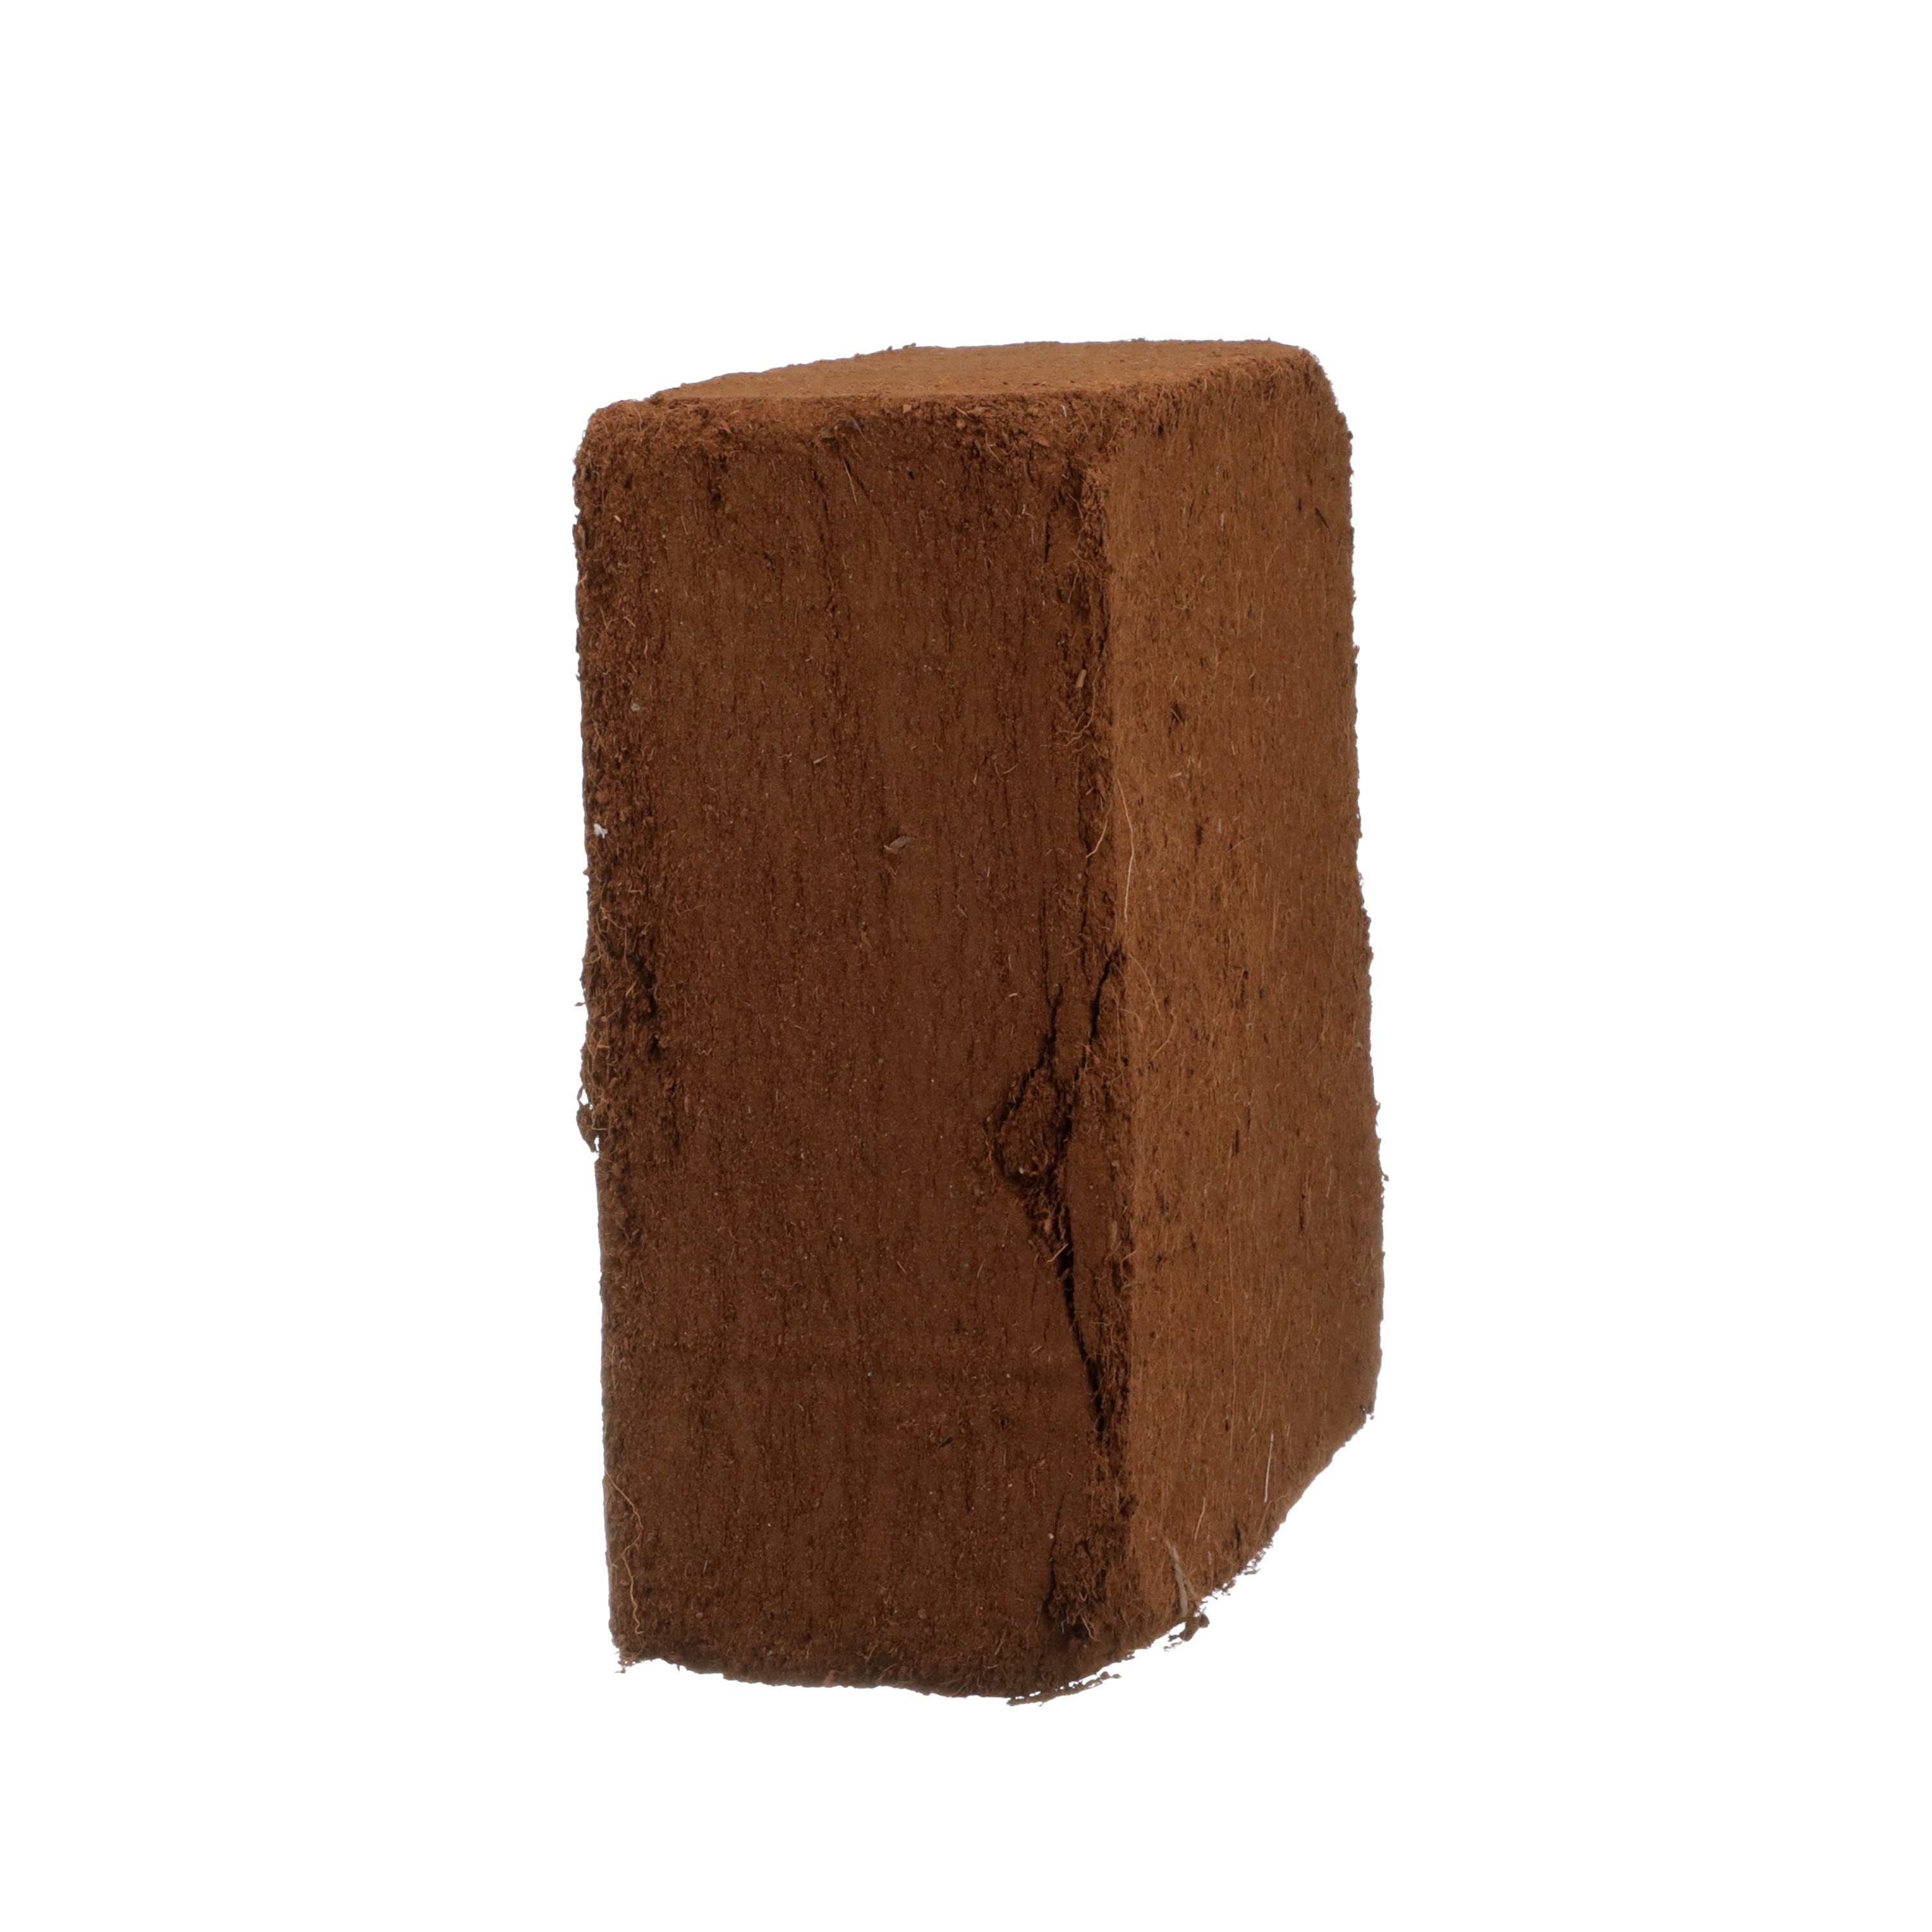 Envelor 10 lbs. Organic Coco Block Coir Brick Potting Soil (4-Pack)  EN-CGM-11-4 - The Home Depot